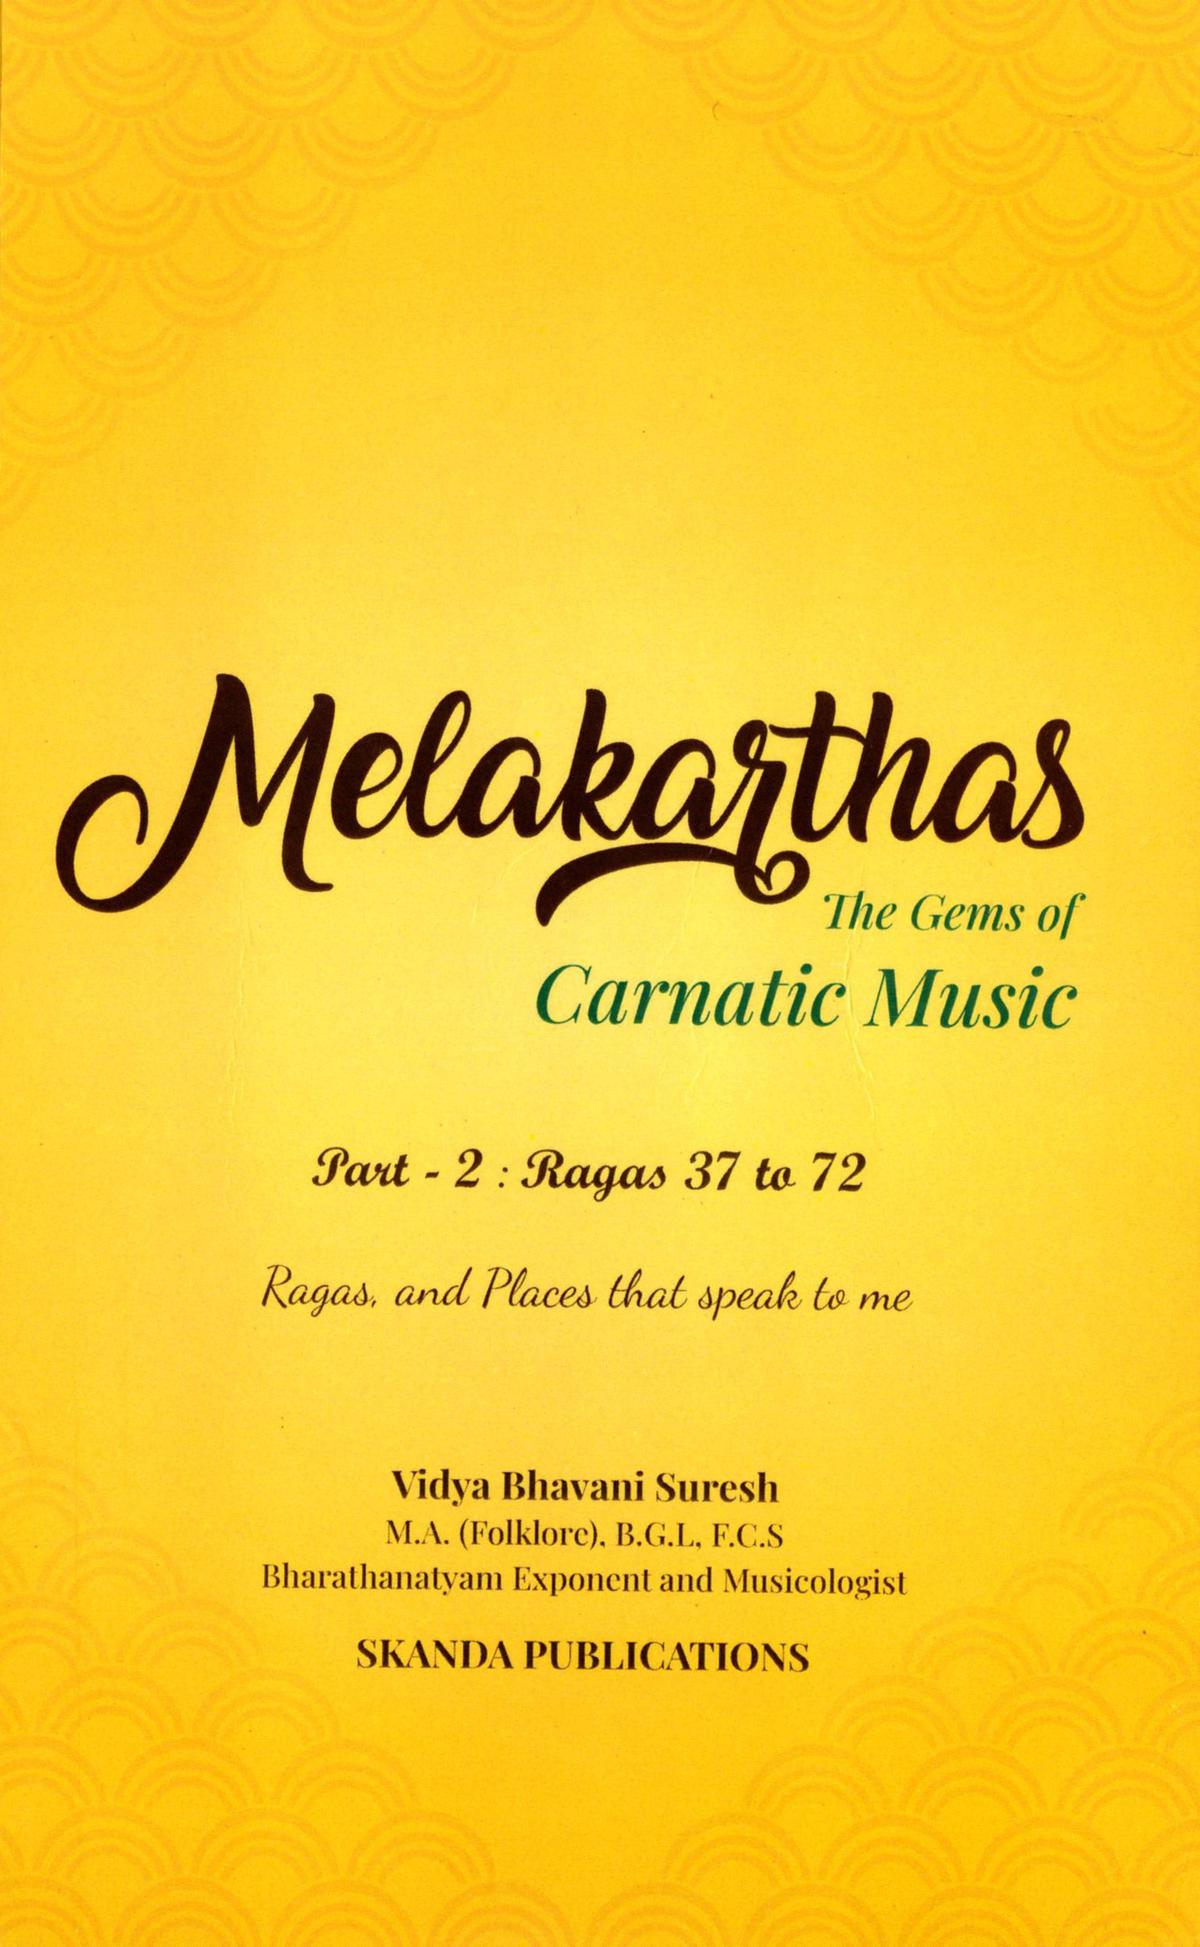 Book by Vidya Bhavani Suresh, Melakartas - Gems of Carnatic Music Part 2 